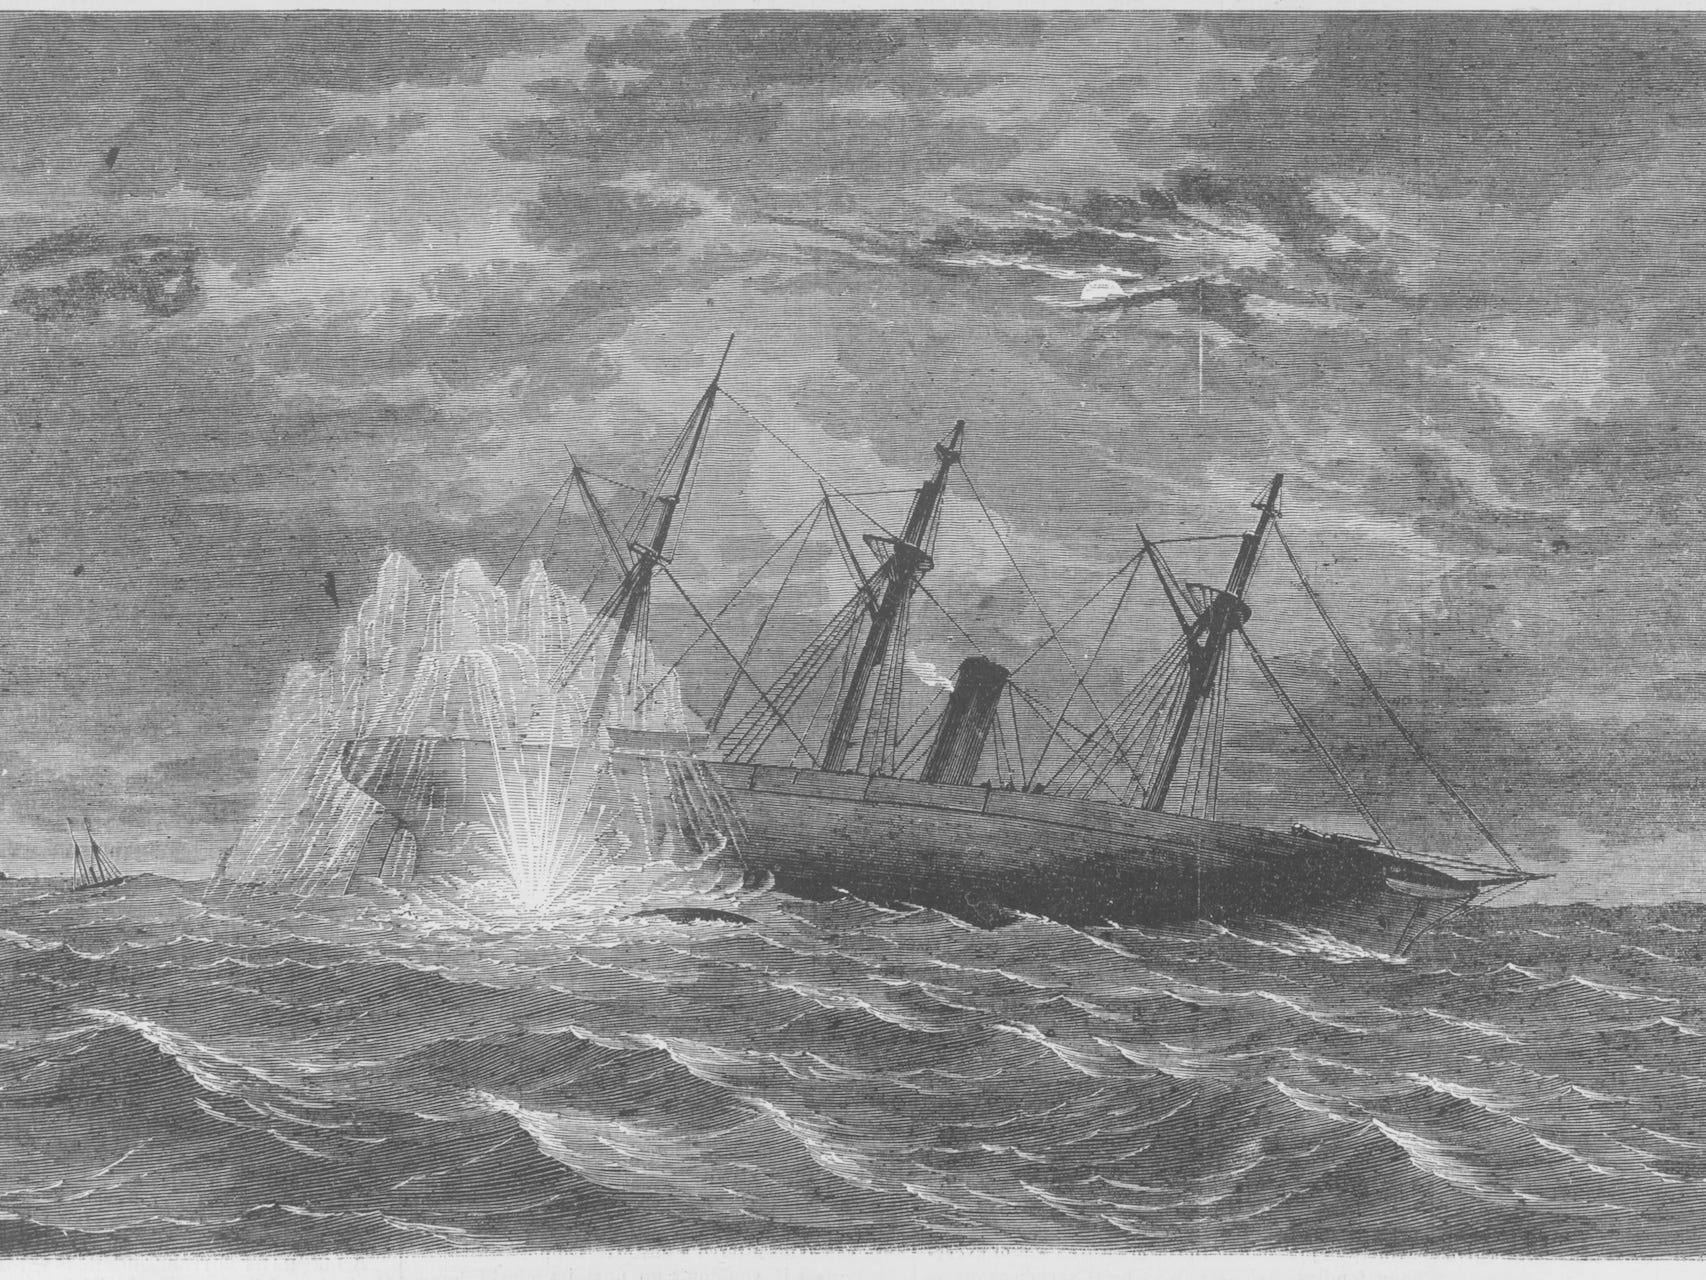 Union navy Civil War USS Housatonic